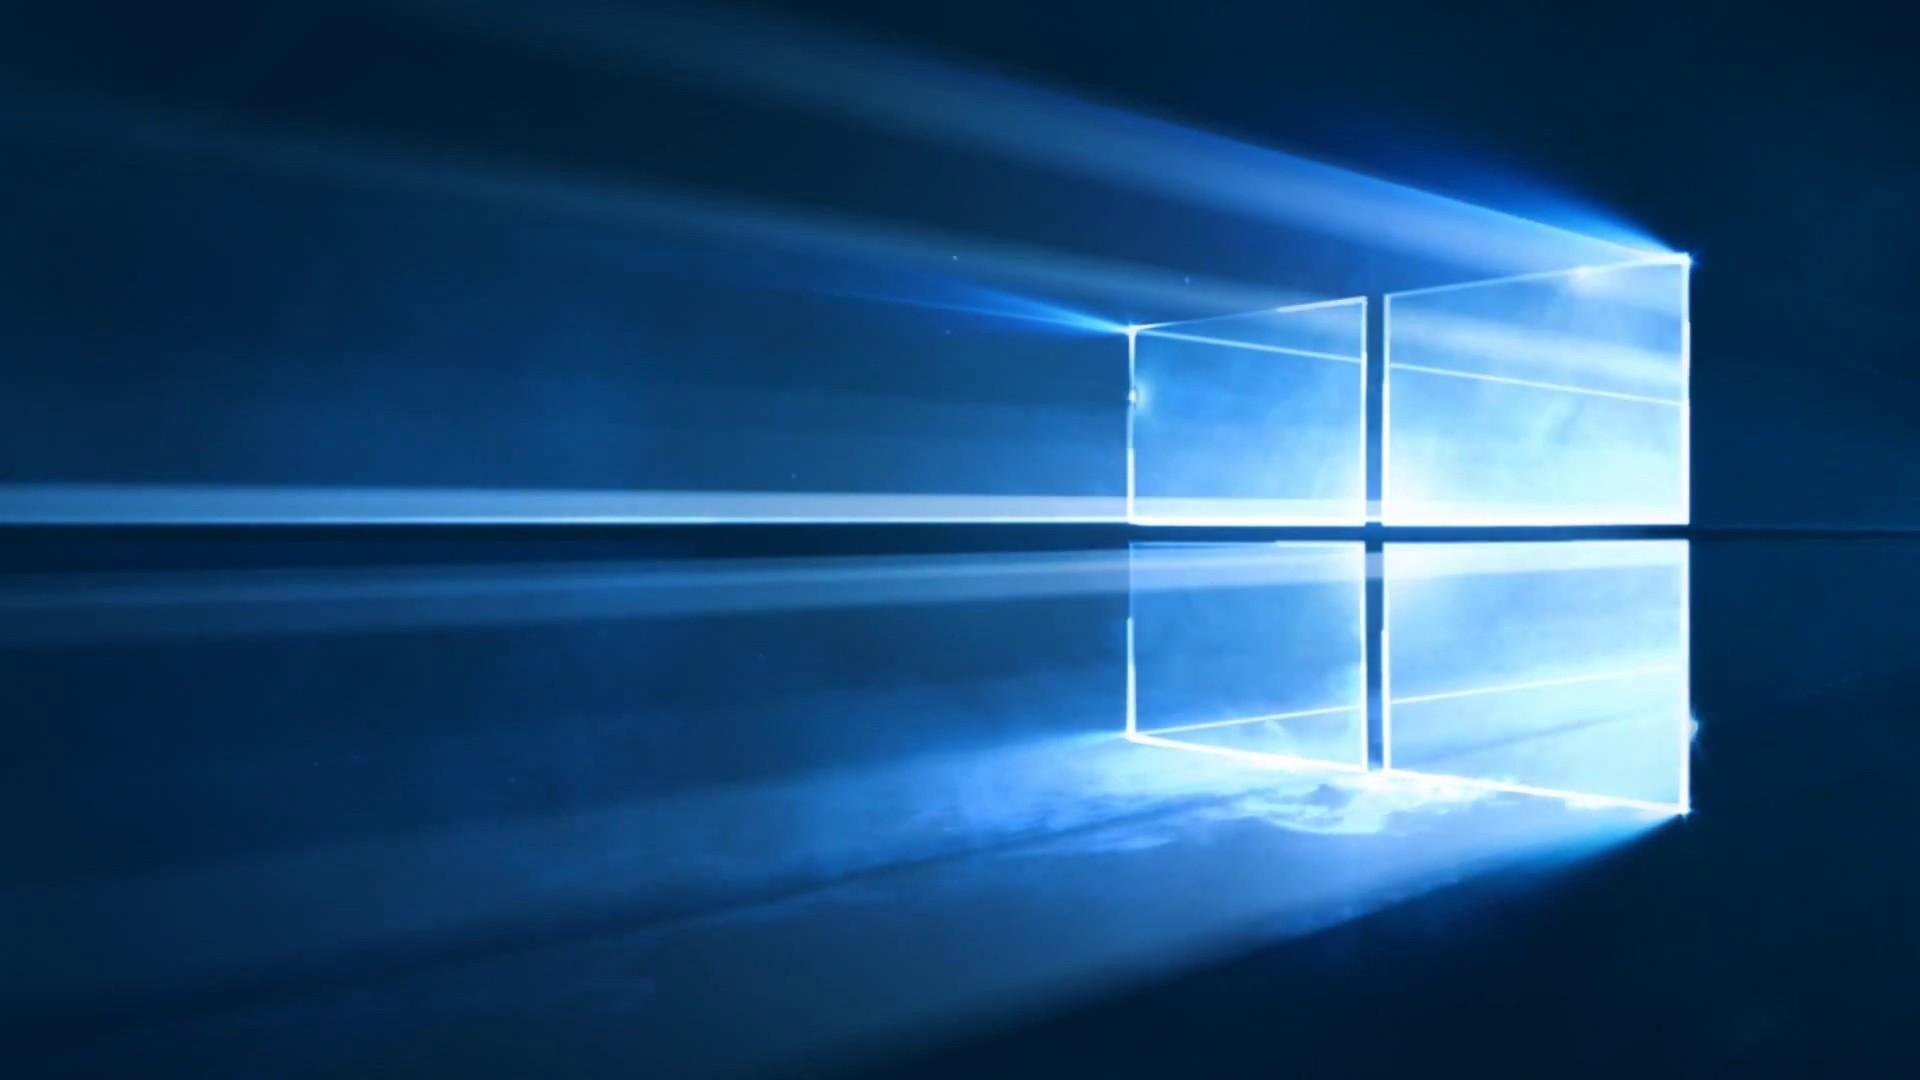 Windows Desktop Image: Windows 10 Desktop Backgrounds Hd